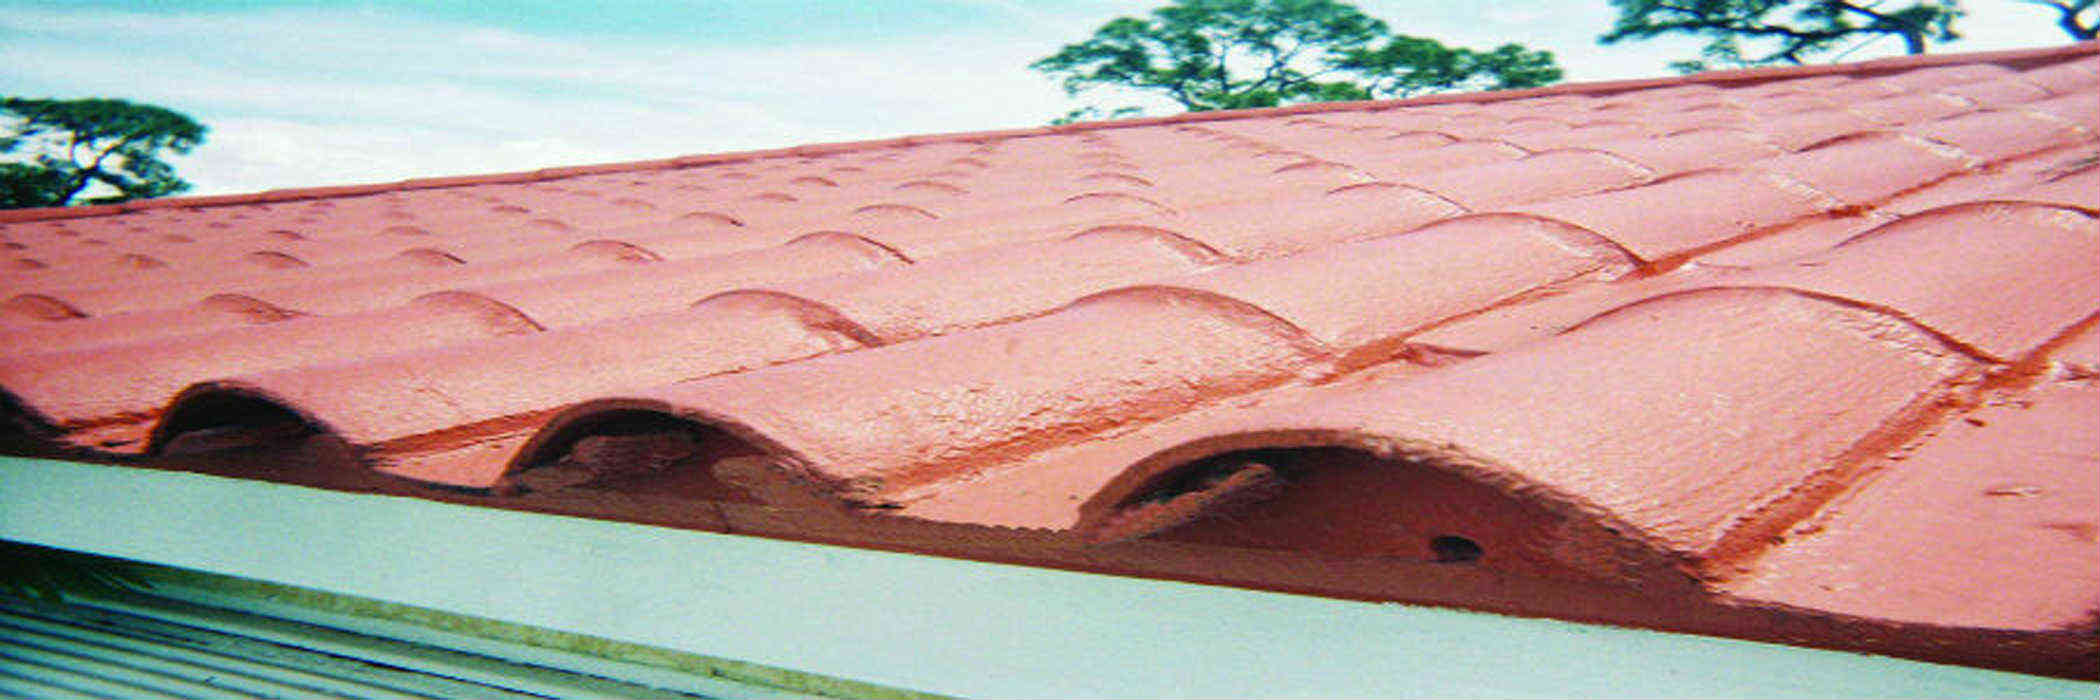 Best Roof Paint, Roof Coatings and Roof Waterproofing